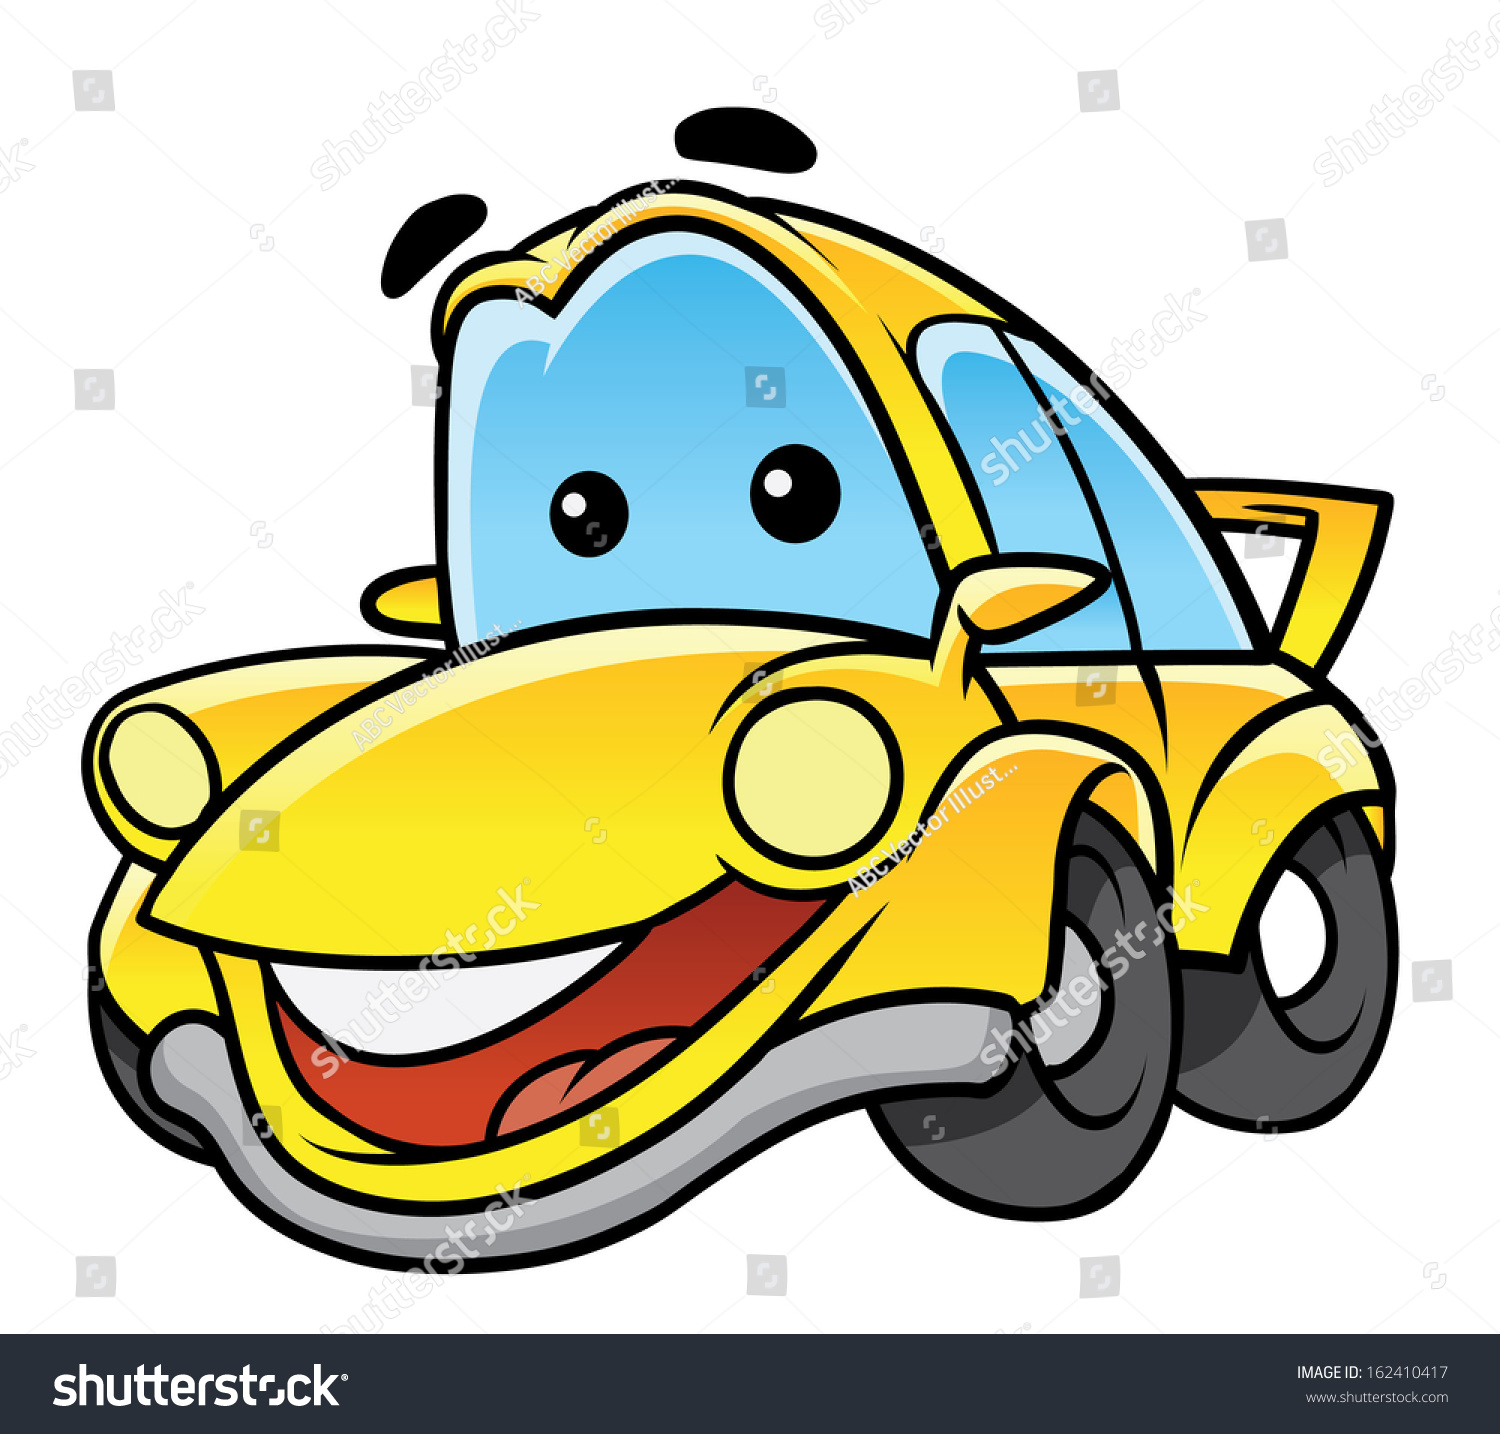 New Car Stock Vector Illustration 162410417 : Shutterstock